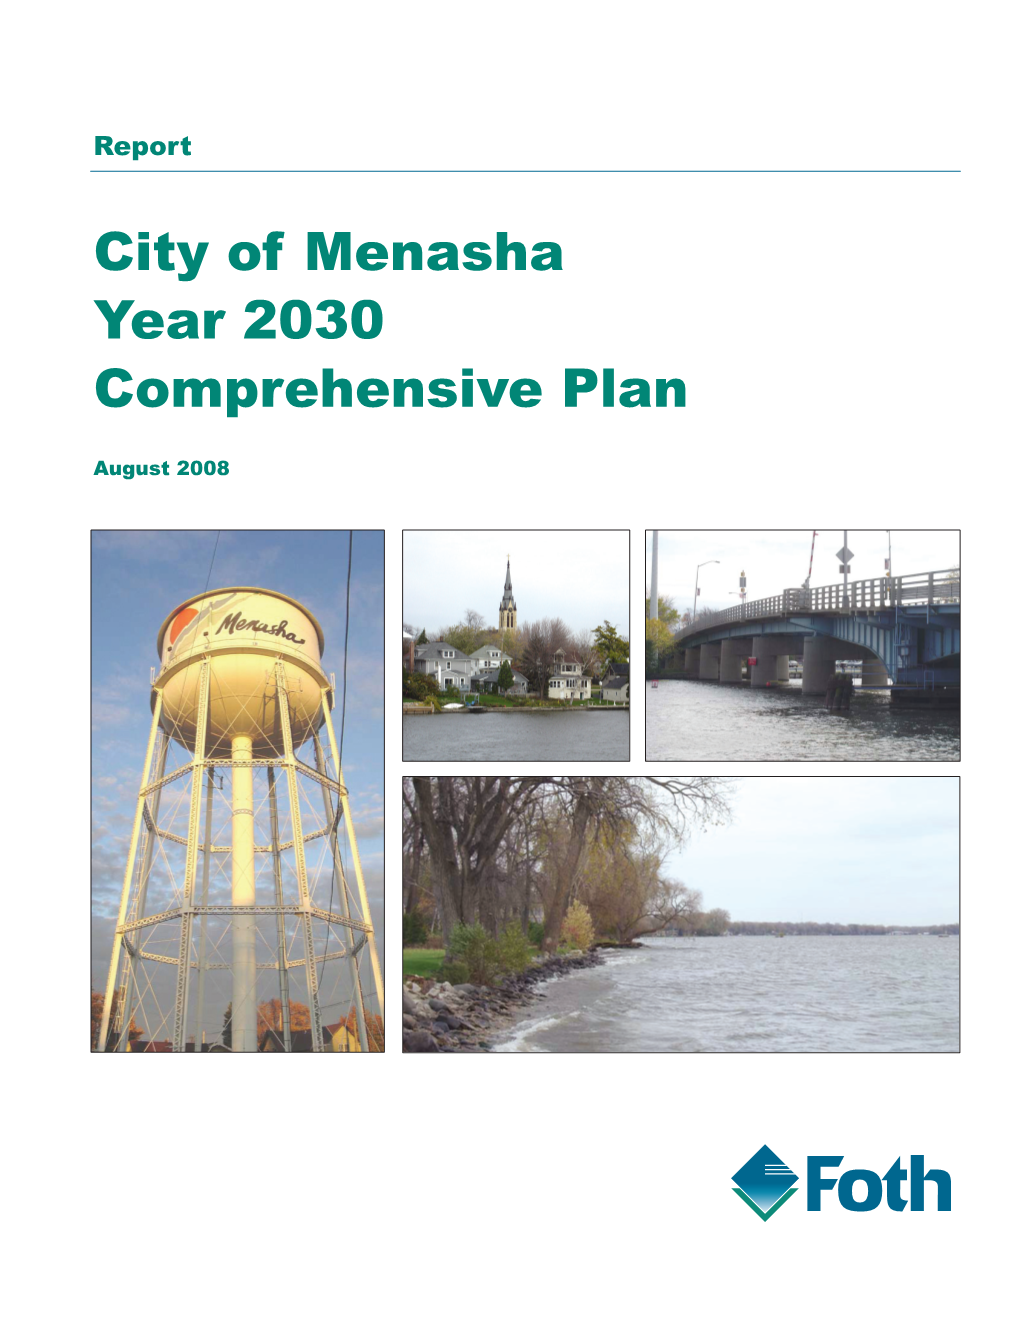 City of Menasha Year 2030 Comprehensive Plan